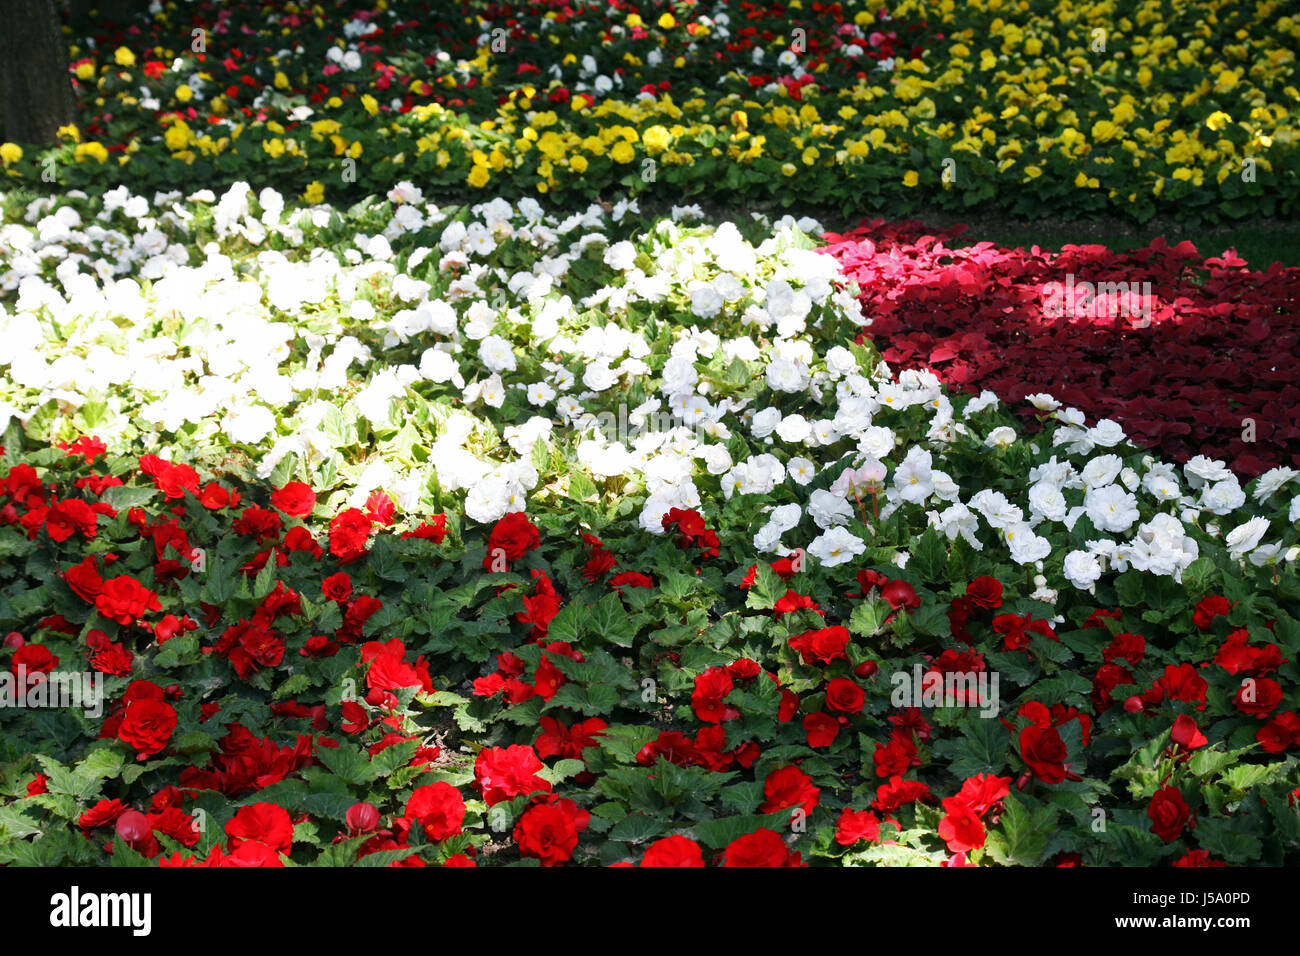 Flowers,plants,gardening and arrangements,spring to summer,Croatia,39 Stock Photo